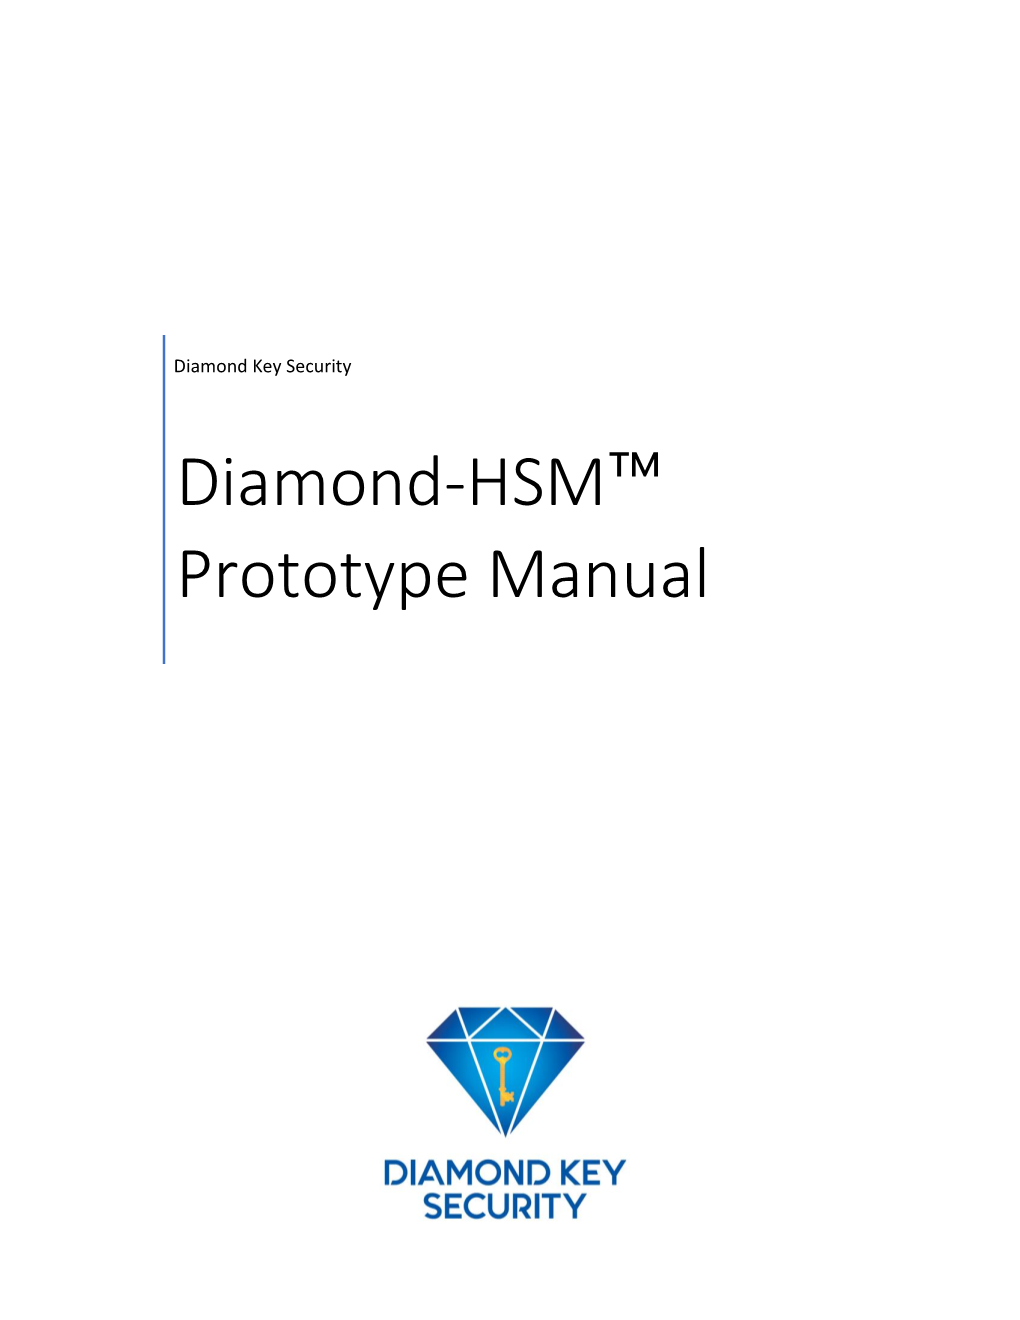 Diamond-HSM™ Prototype Manual